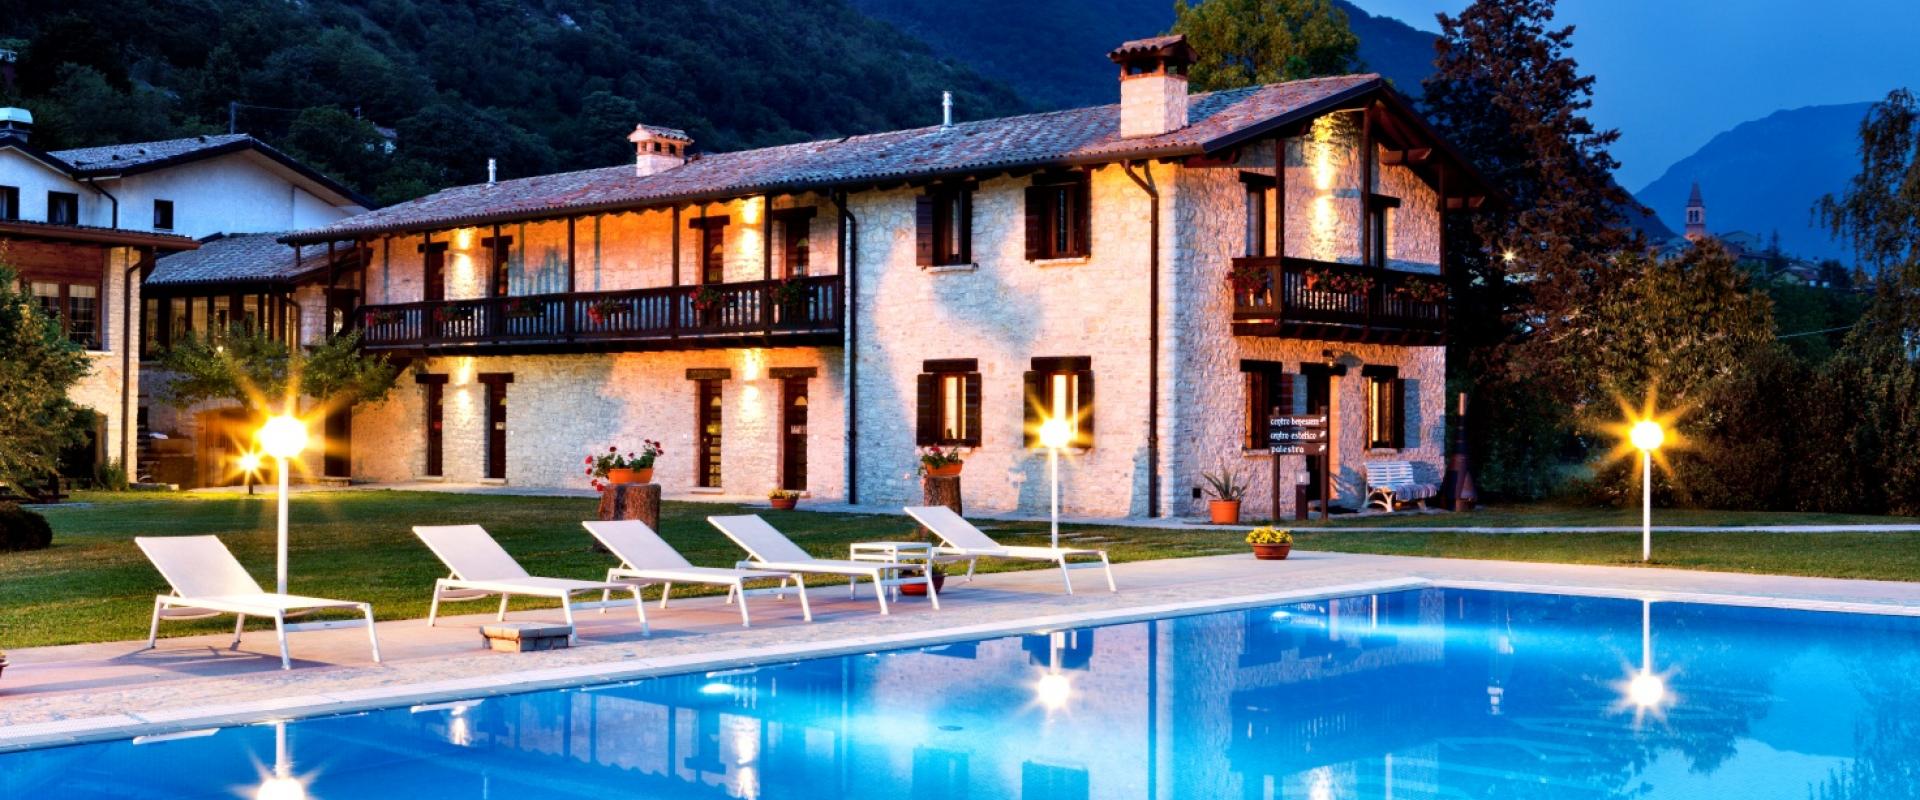 Hotel in Treviso area